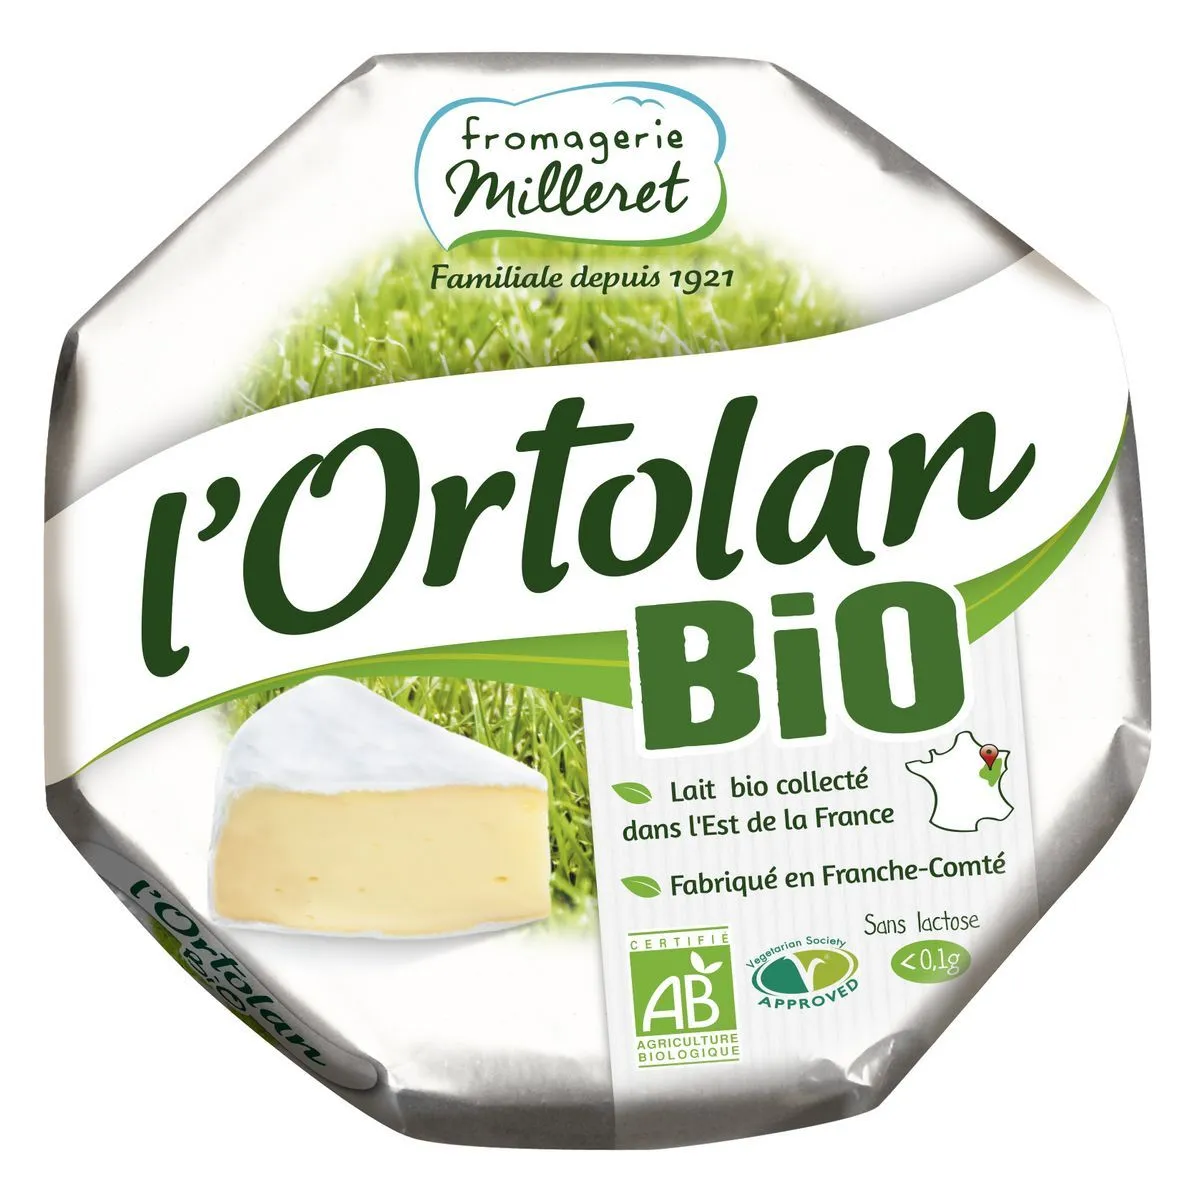 l'ortolan bio fromagerie